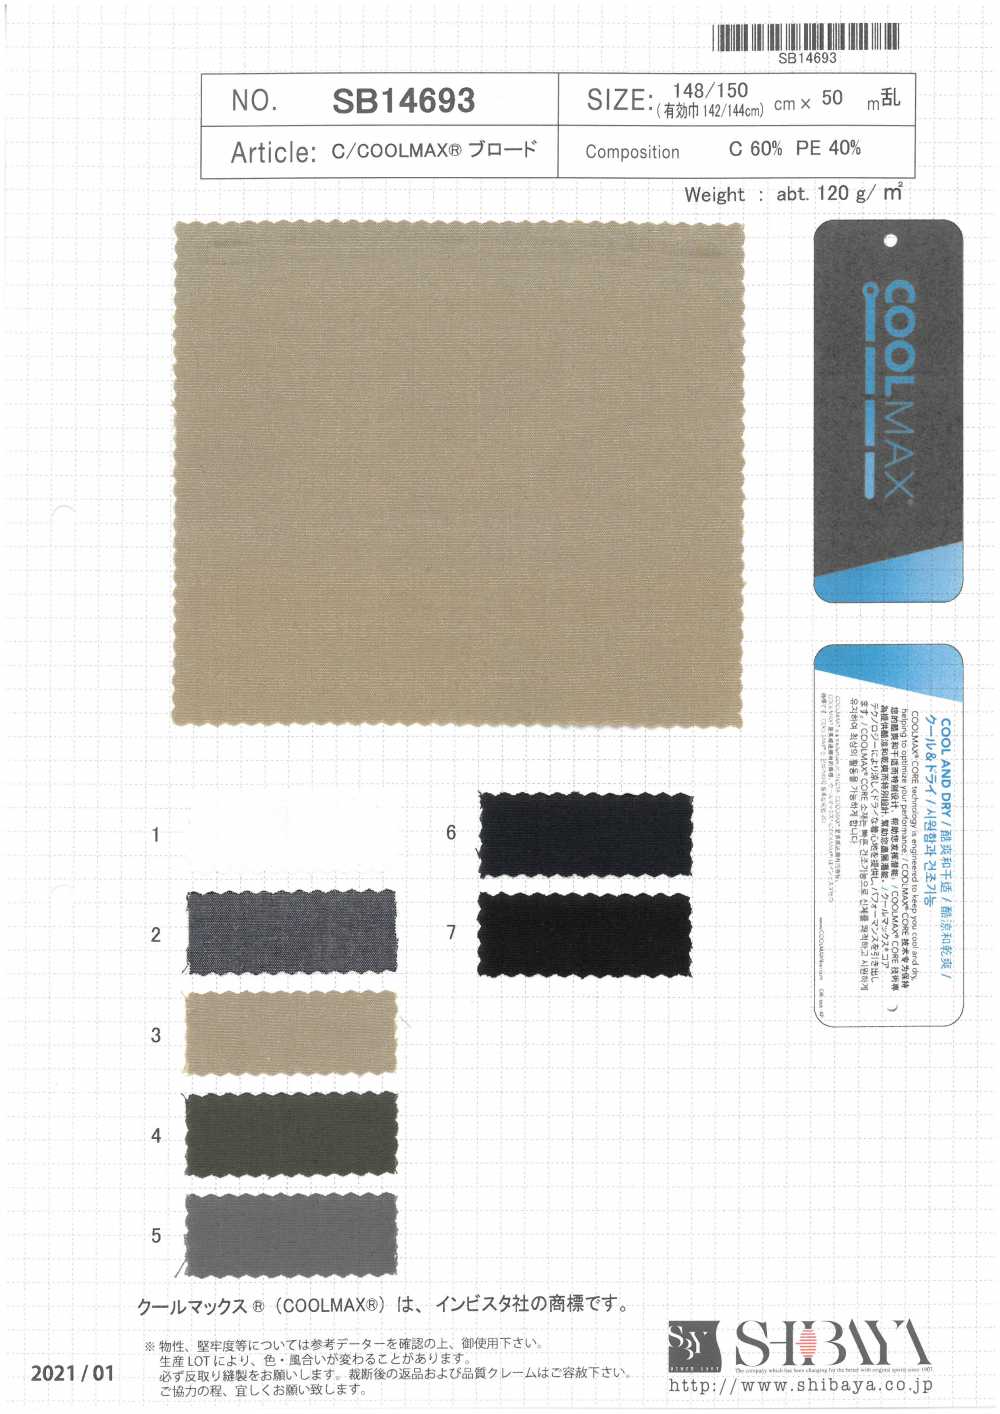 SB14693 C / COOLMAX Wollstoff[Textilgewebe] SHIBAYA